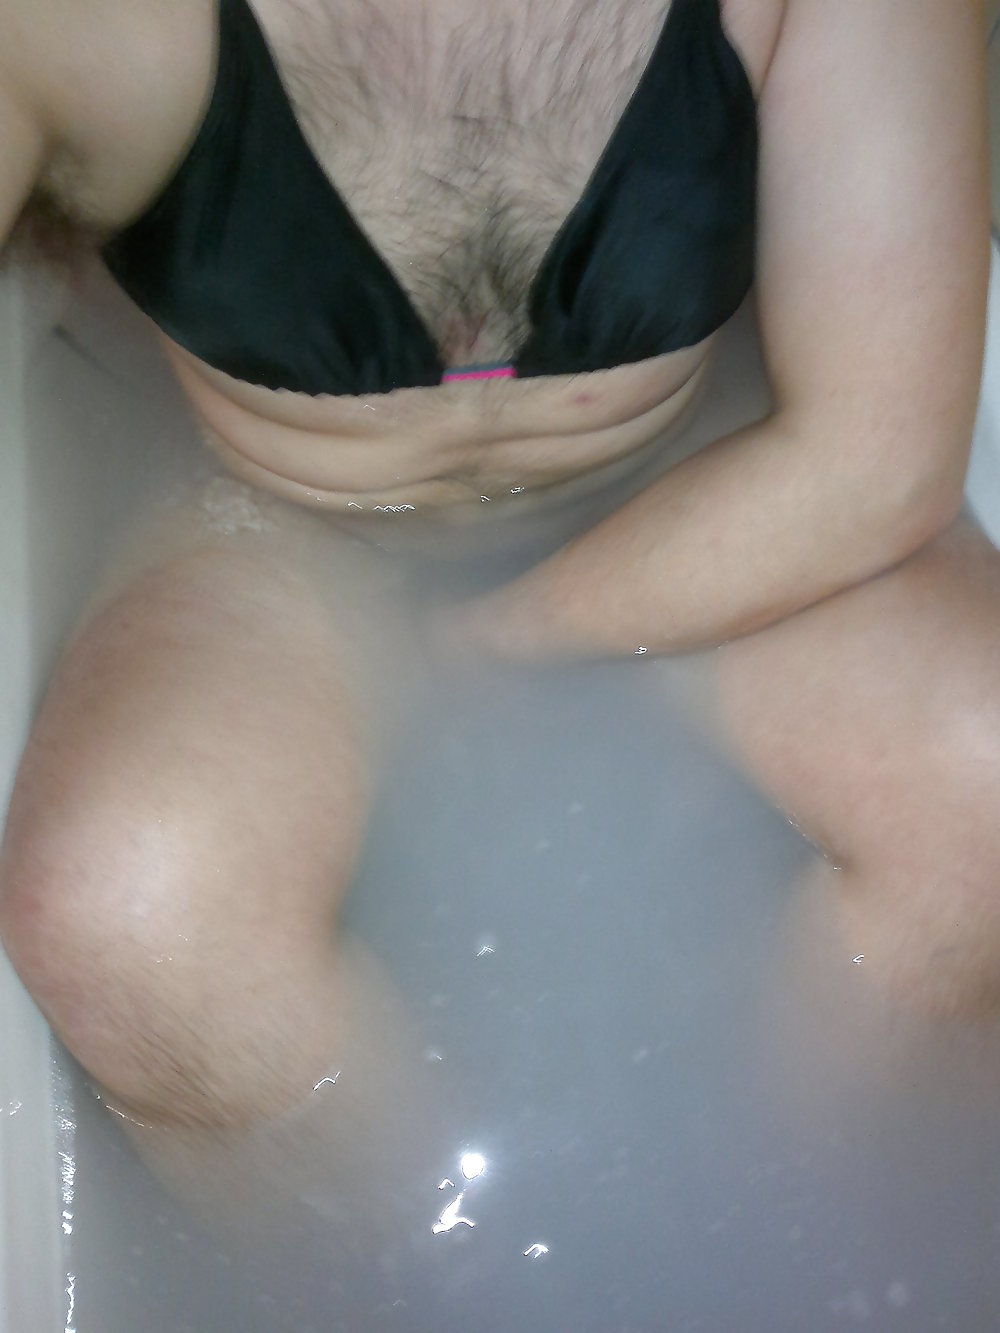 Crossdresser in wet Bikini (DWT) #8403949